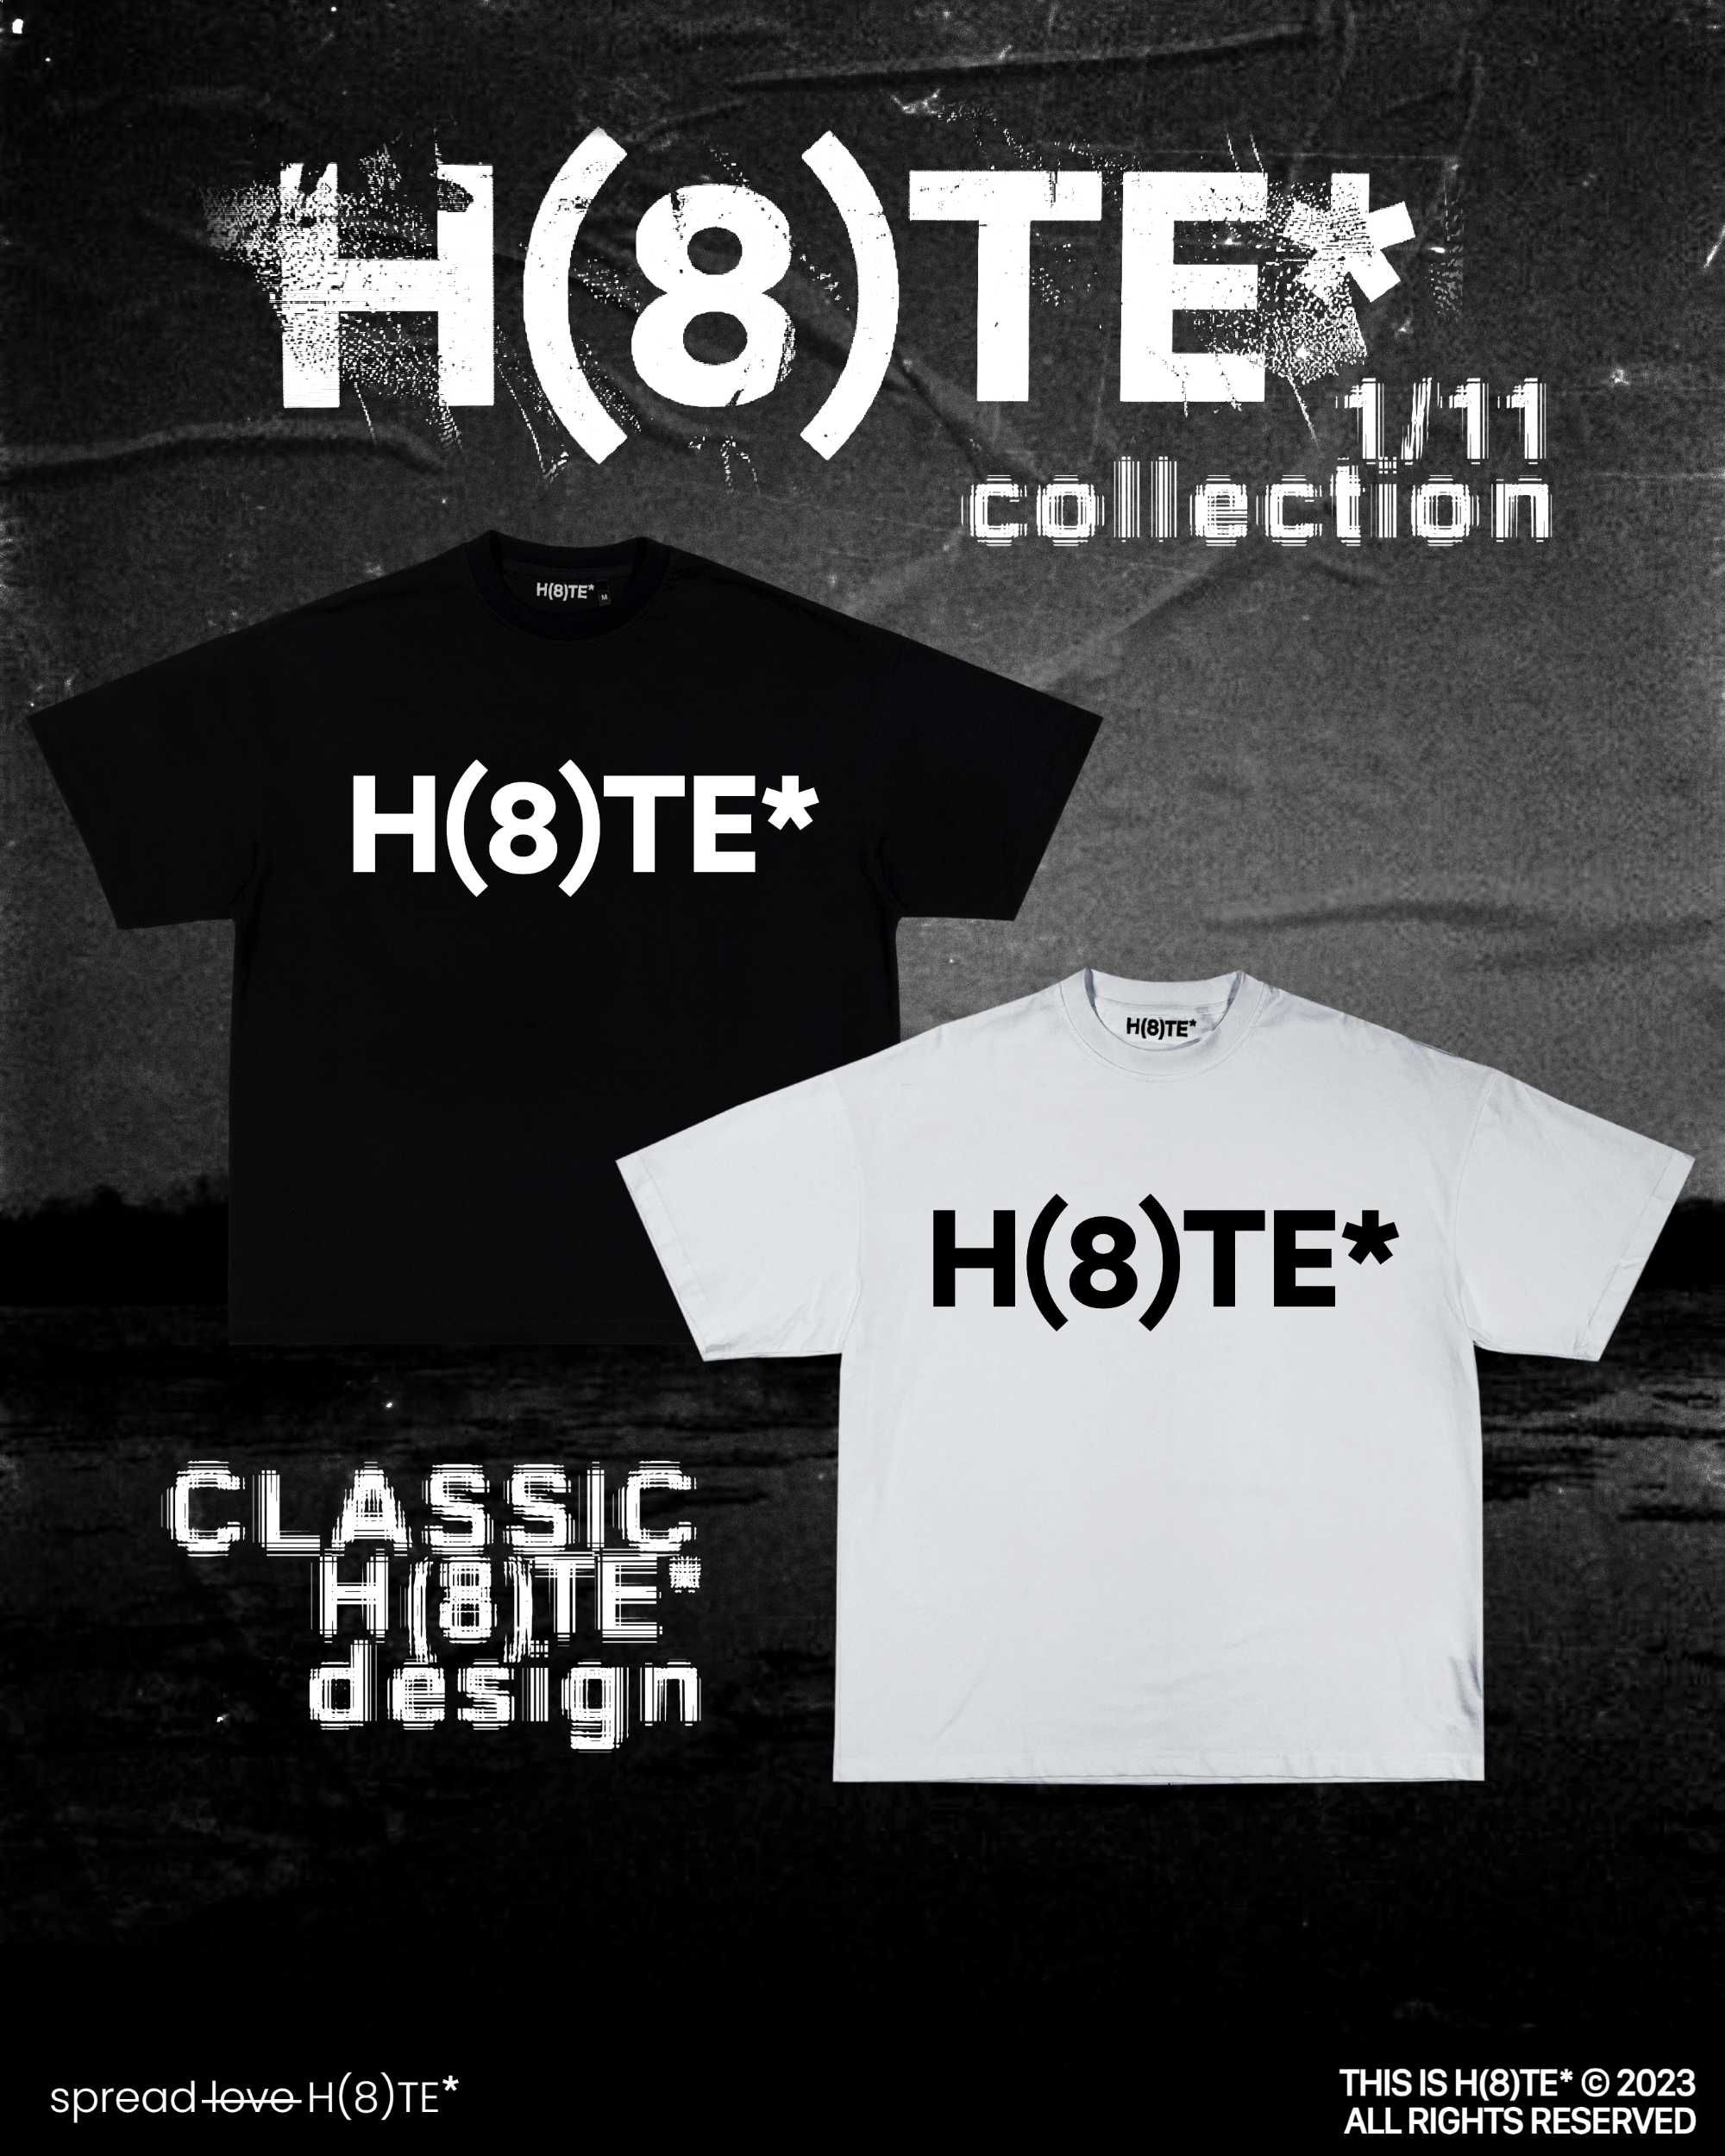 H(8)TE* - tshirt collection.